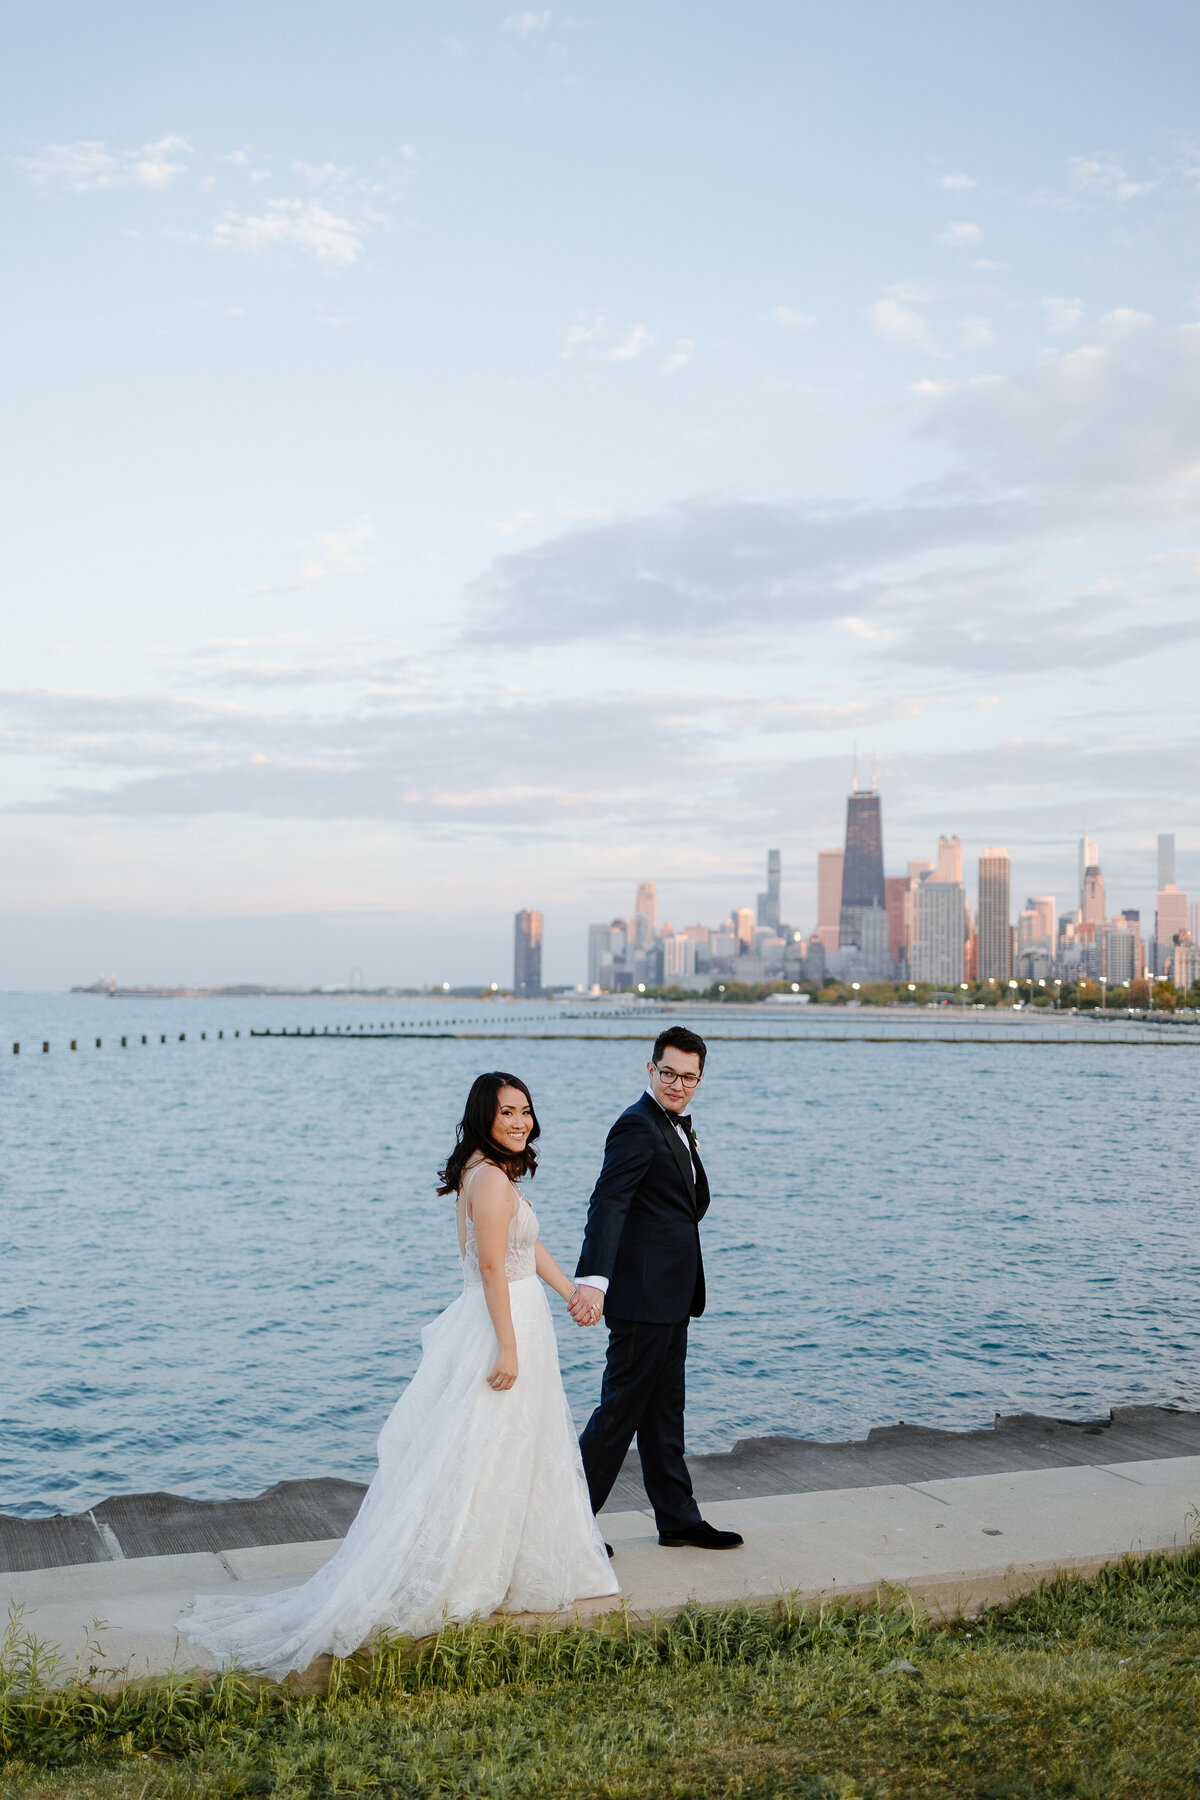 Nichole-Babiez-Photography-Theater-on-the-lake-Chicago-Illinois-Wedding-Photographer-Kimpton-Gray-Hotel-Board-Of-Trade-Couples-Portraits-784